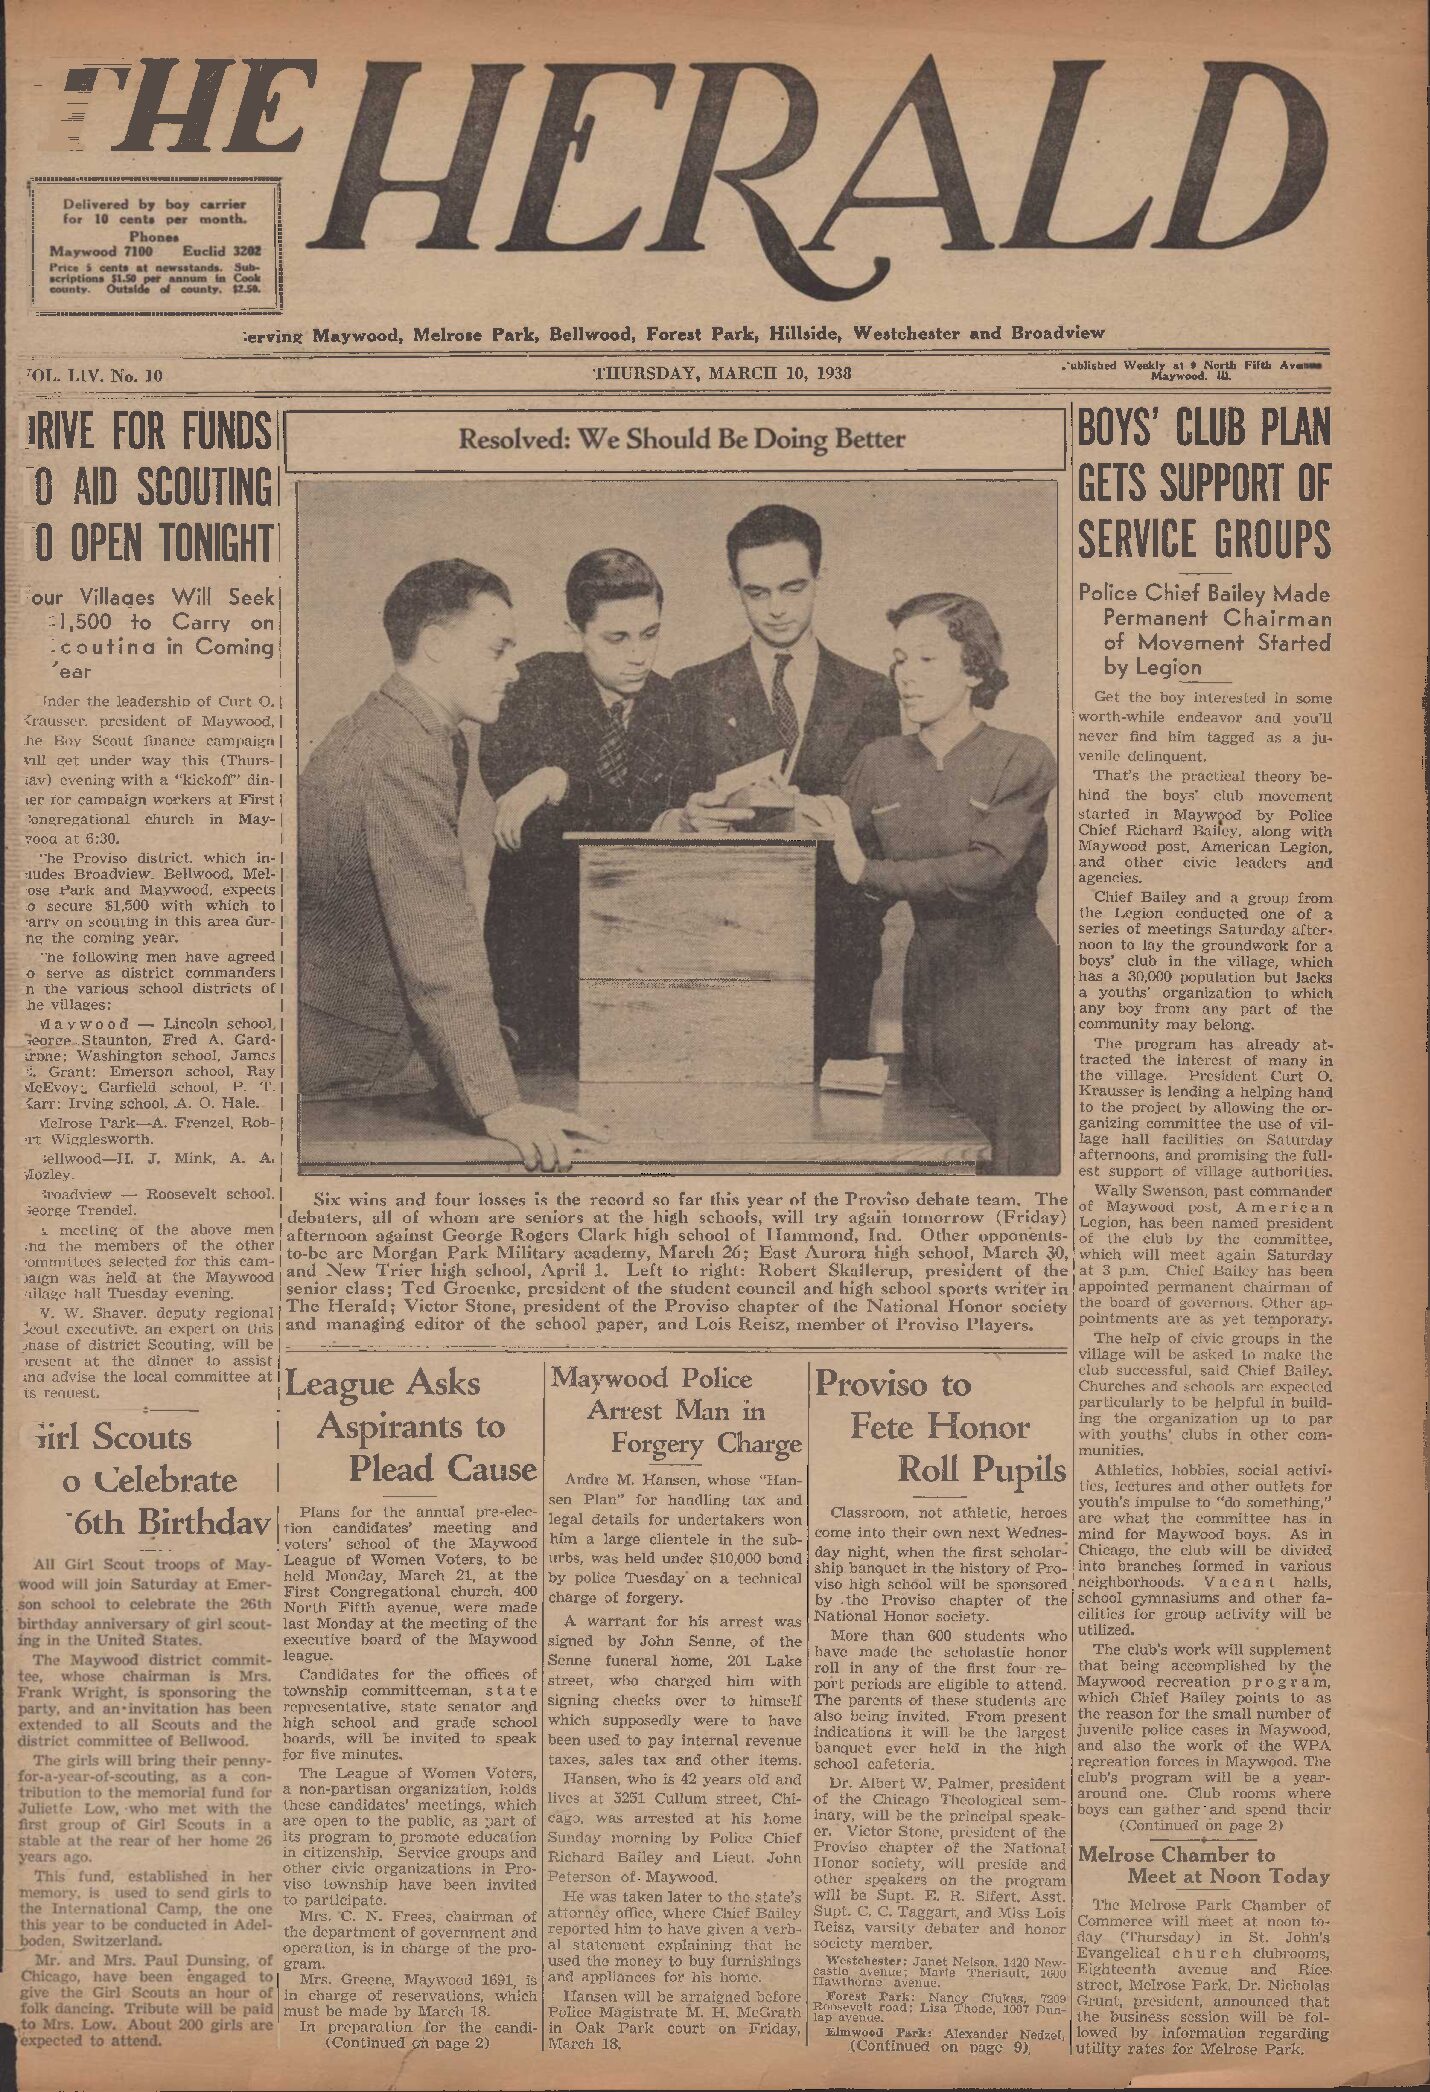 The Herald – 19380310